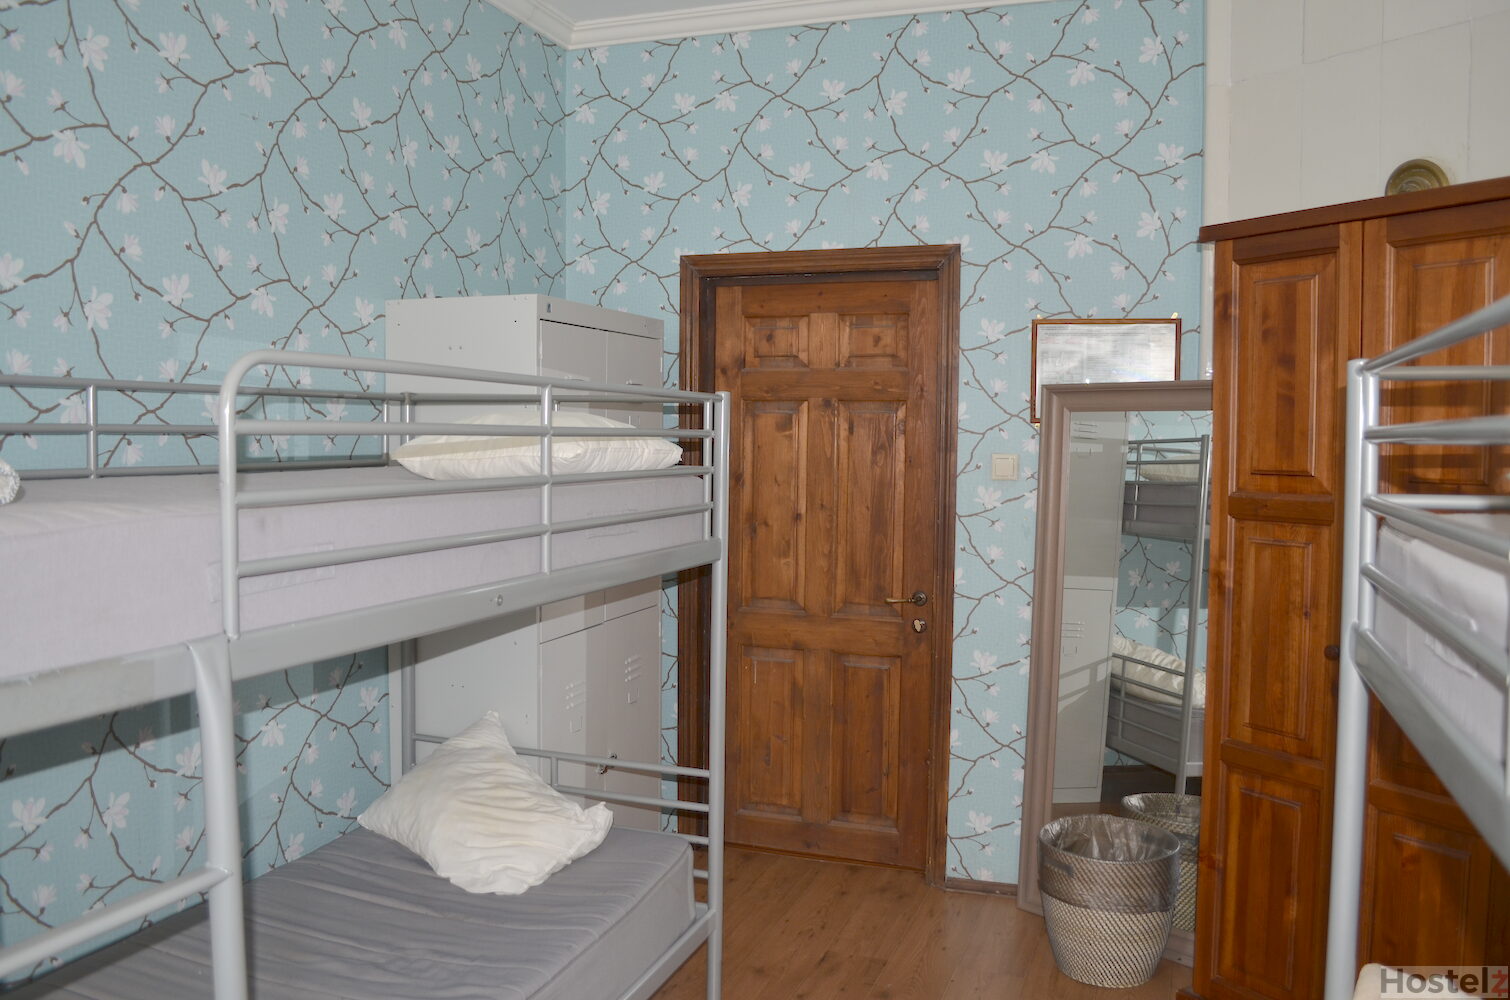 4-bed female dorm